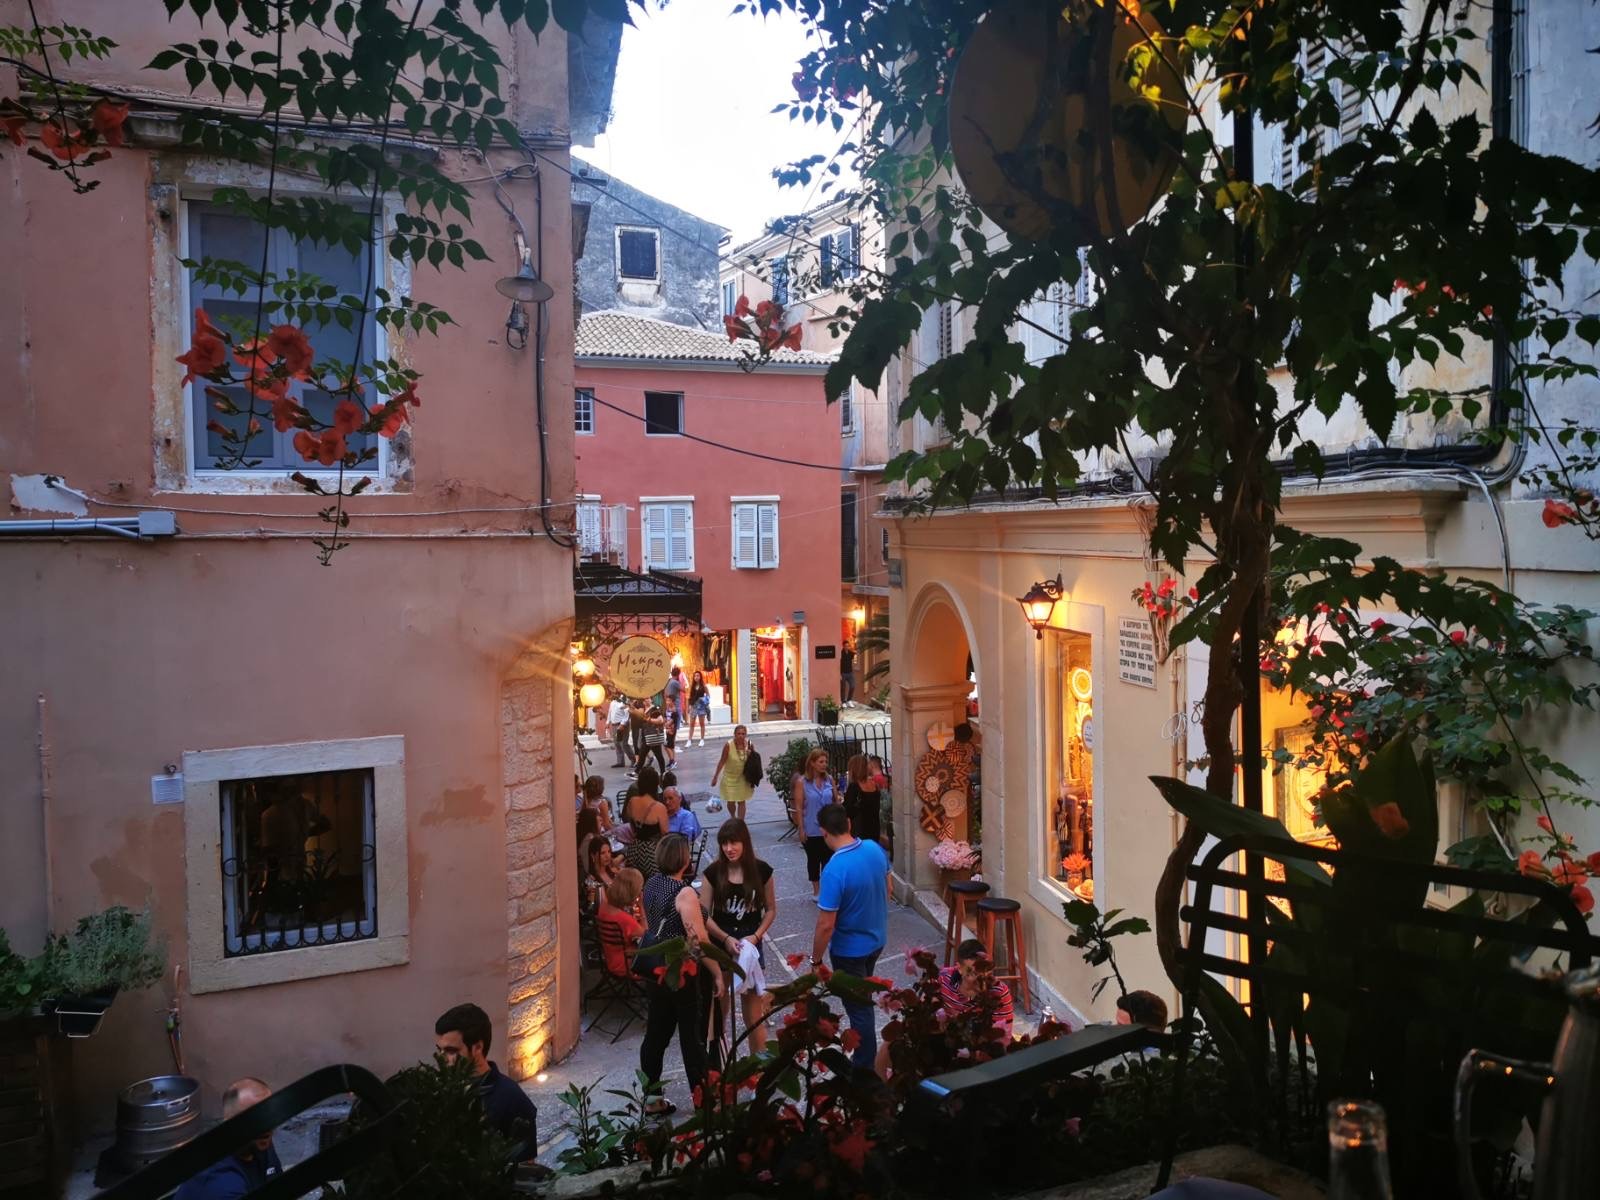 Wandering and exploring downtown Corfu